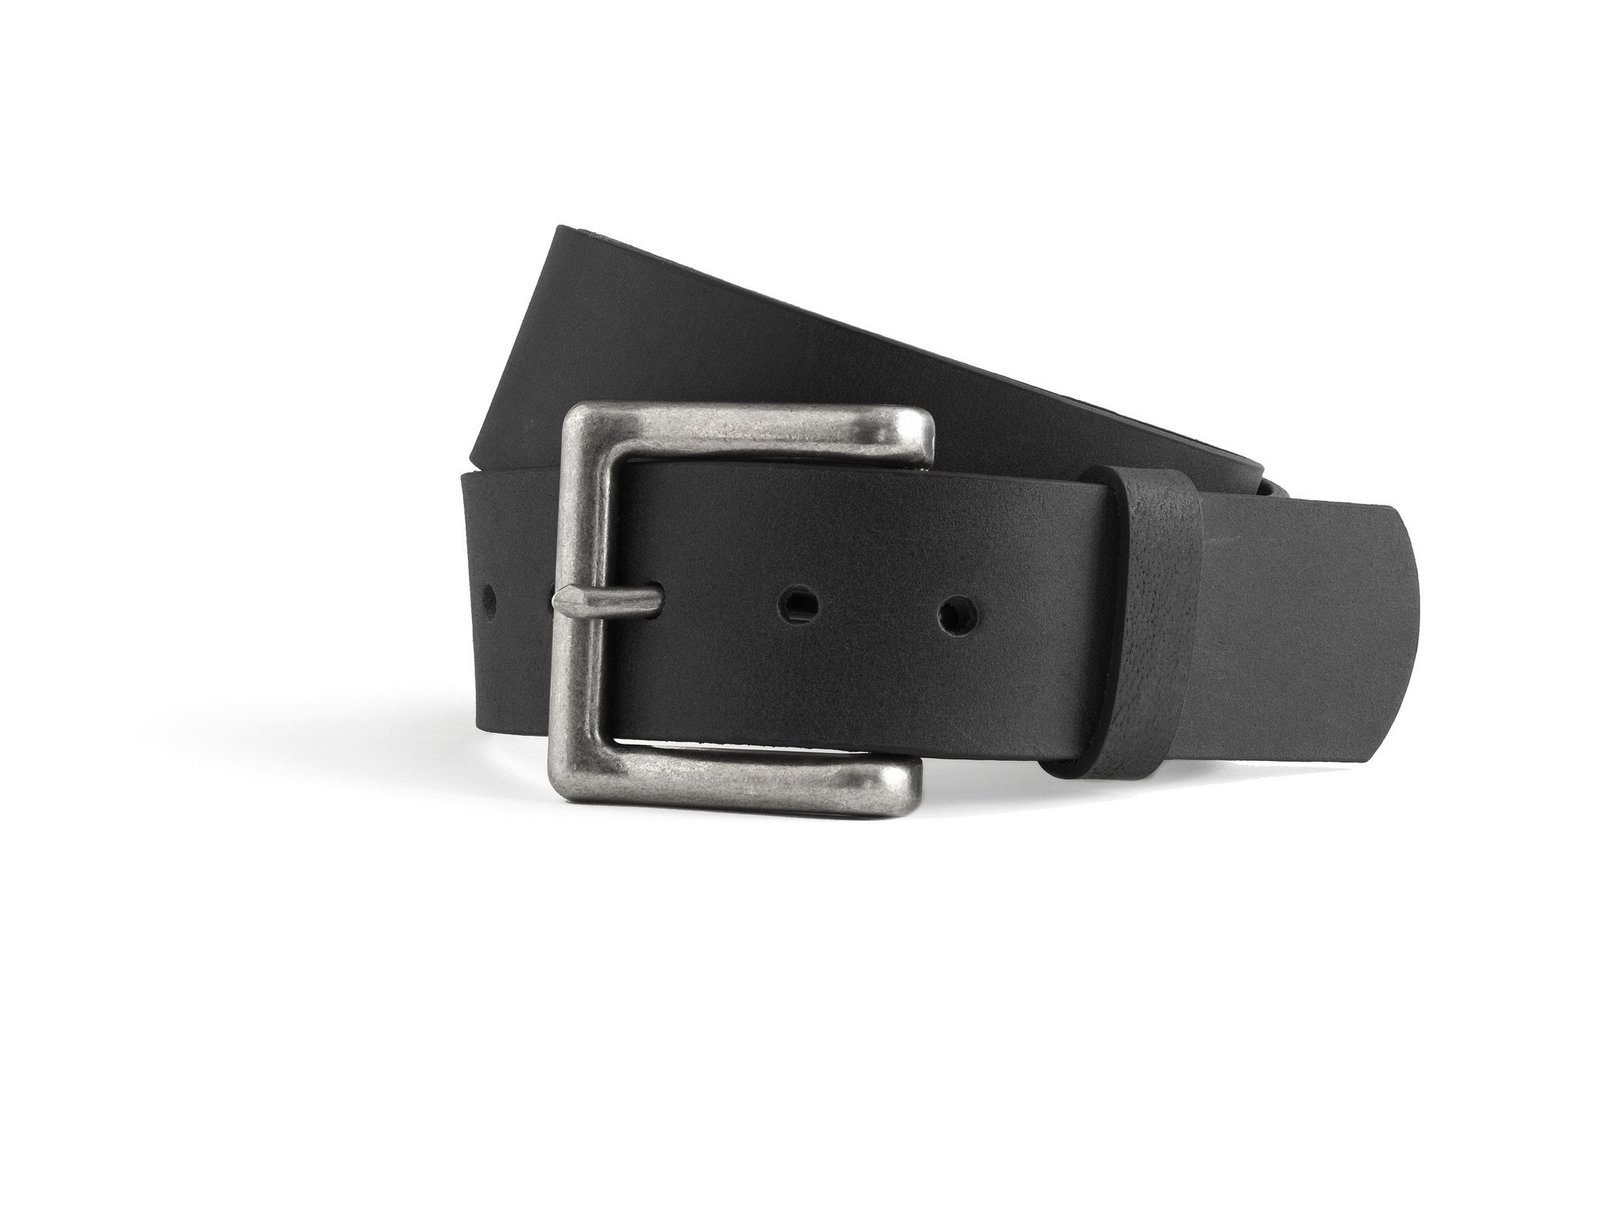 Leather Belt for Bikers - Choice of Black or Brown - SKU FIMB16005-FM